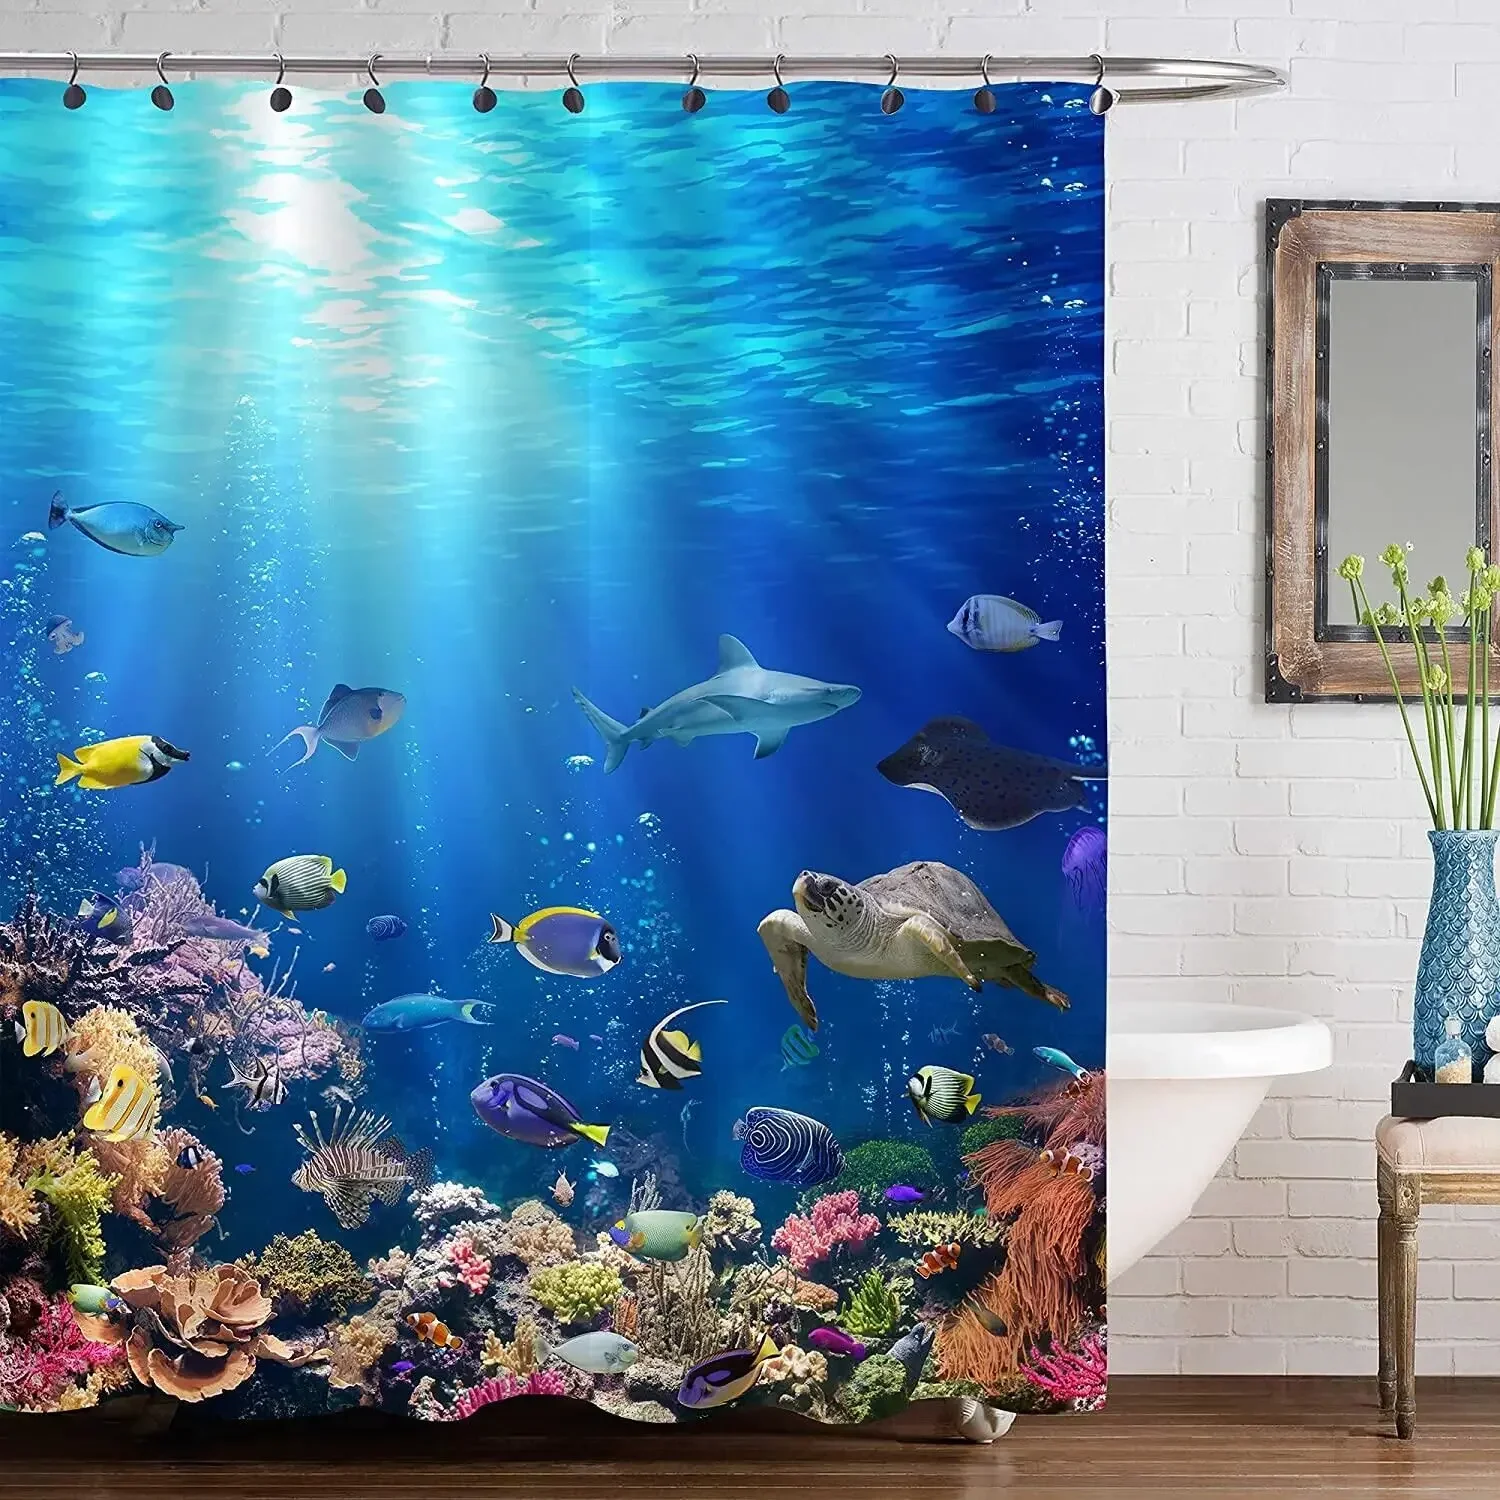 

Tropical Ocean Shower Curtains for Kids Blue Ocean Dolphin Sea Turtle Fish Themed Kids Bathroom Fabric for Bath Curtain Decor